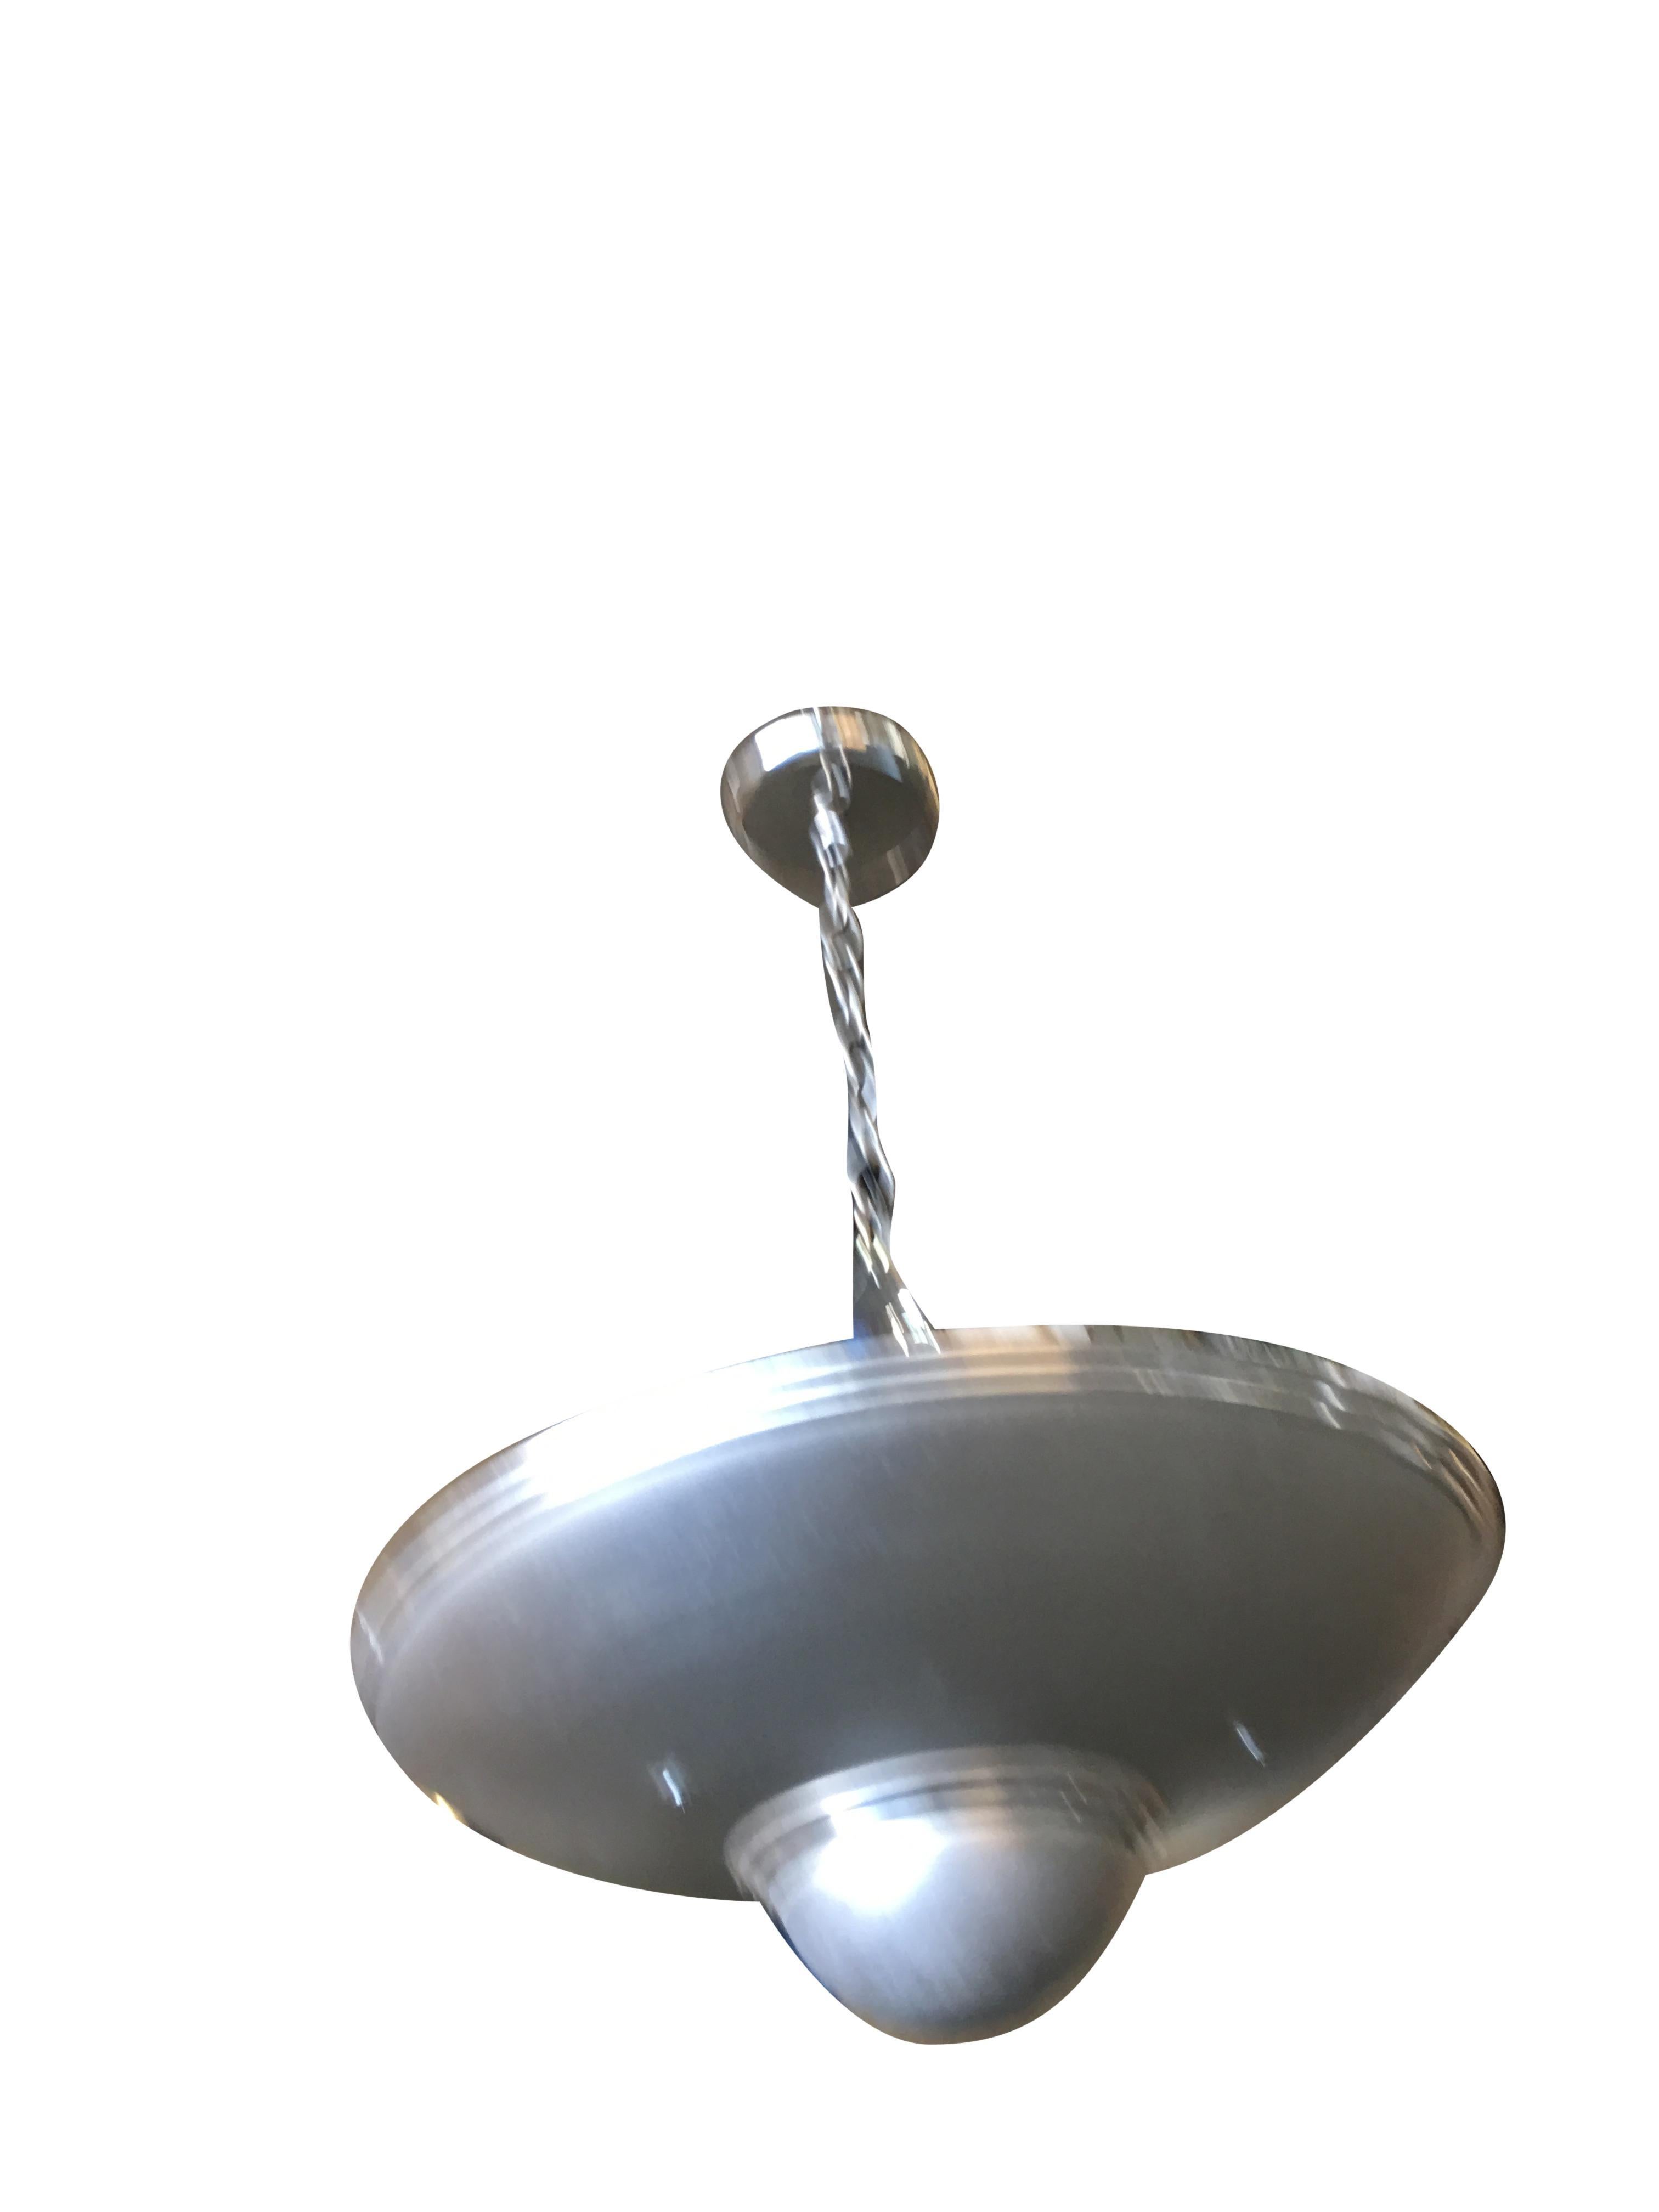 Vintage 1930s aluminum Art Deco saucer-shaped hanging ceiling pendant lamp. Available 2.